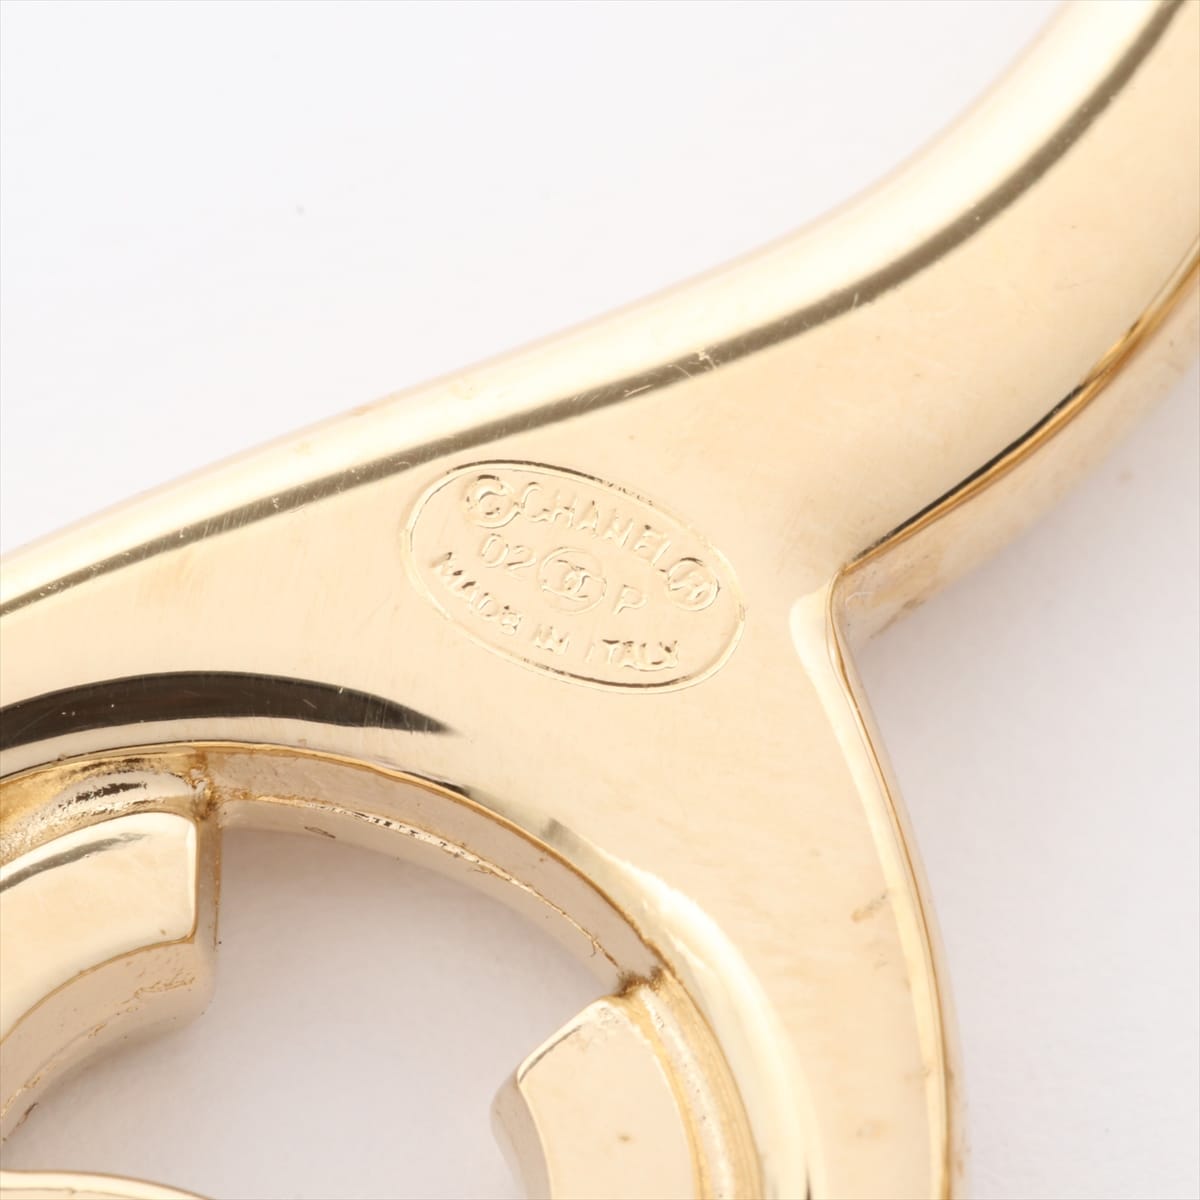 Chanel Brooch GP Gold 02P scissors pink rhinestones